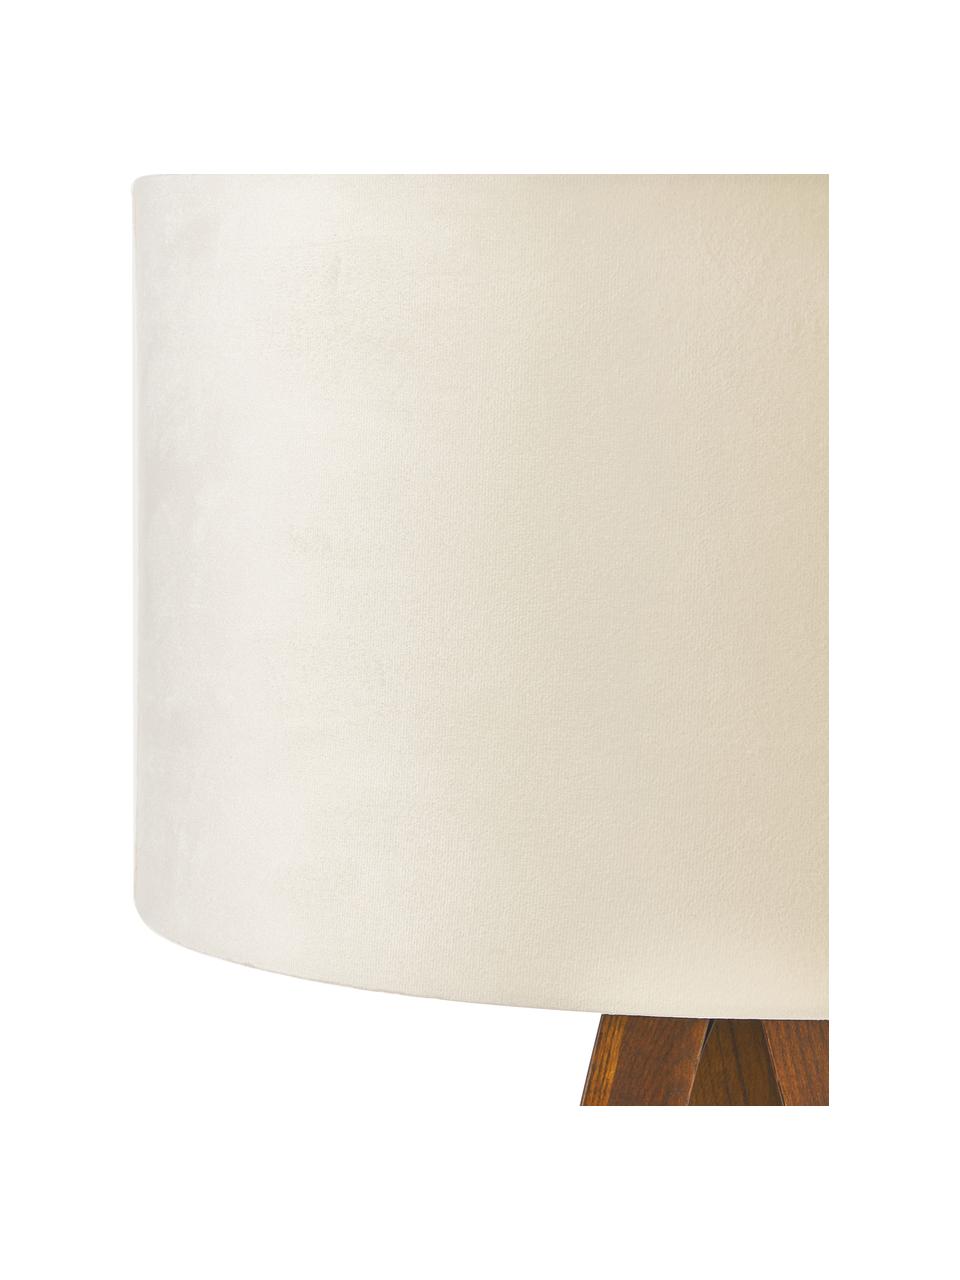 Tripod vloerlamp Jake van massief hout met fluwelen lampenkap, Lampenkap: fluweel, Lampvoet: essenhout, FSC-gecertific, Gebroken wit, bruin, H 150cm